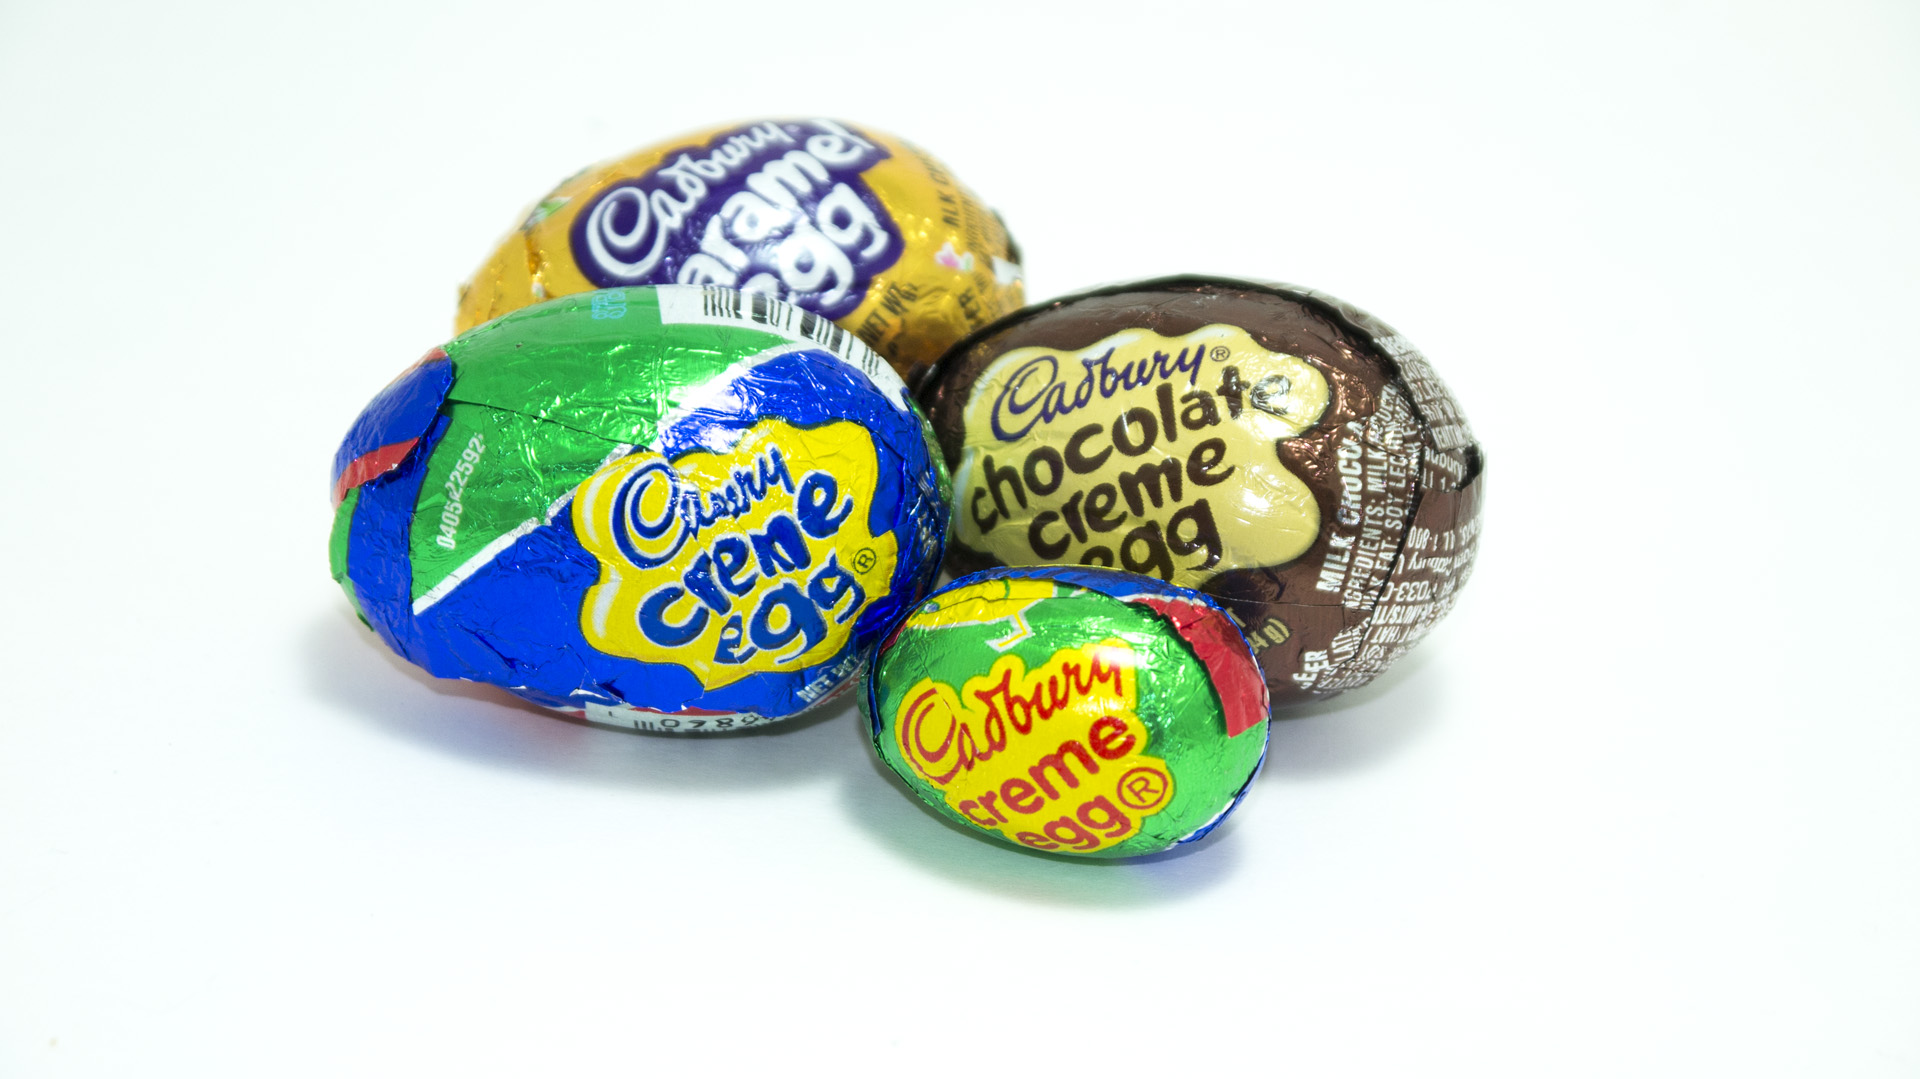 Cadbury Creme Eggs: The Snacktaku Review